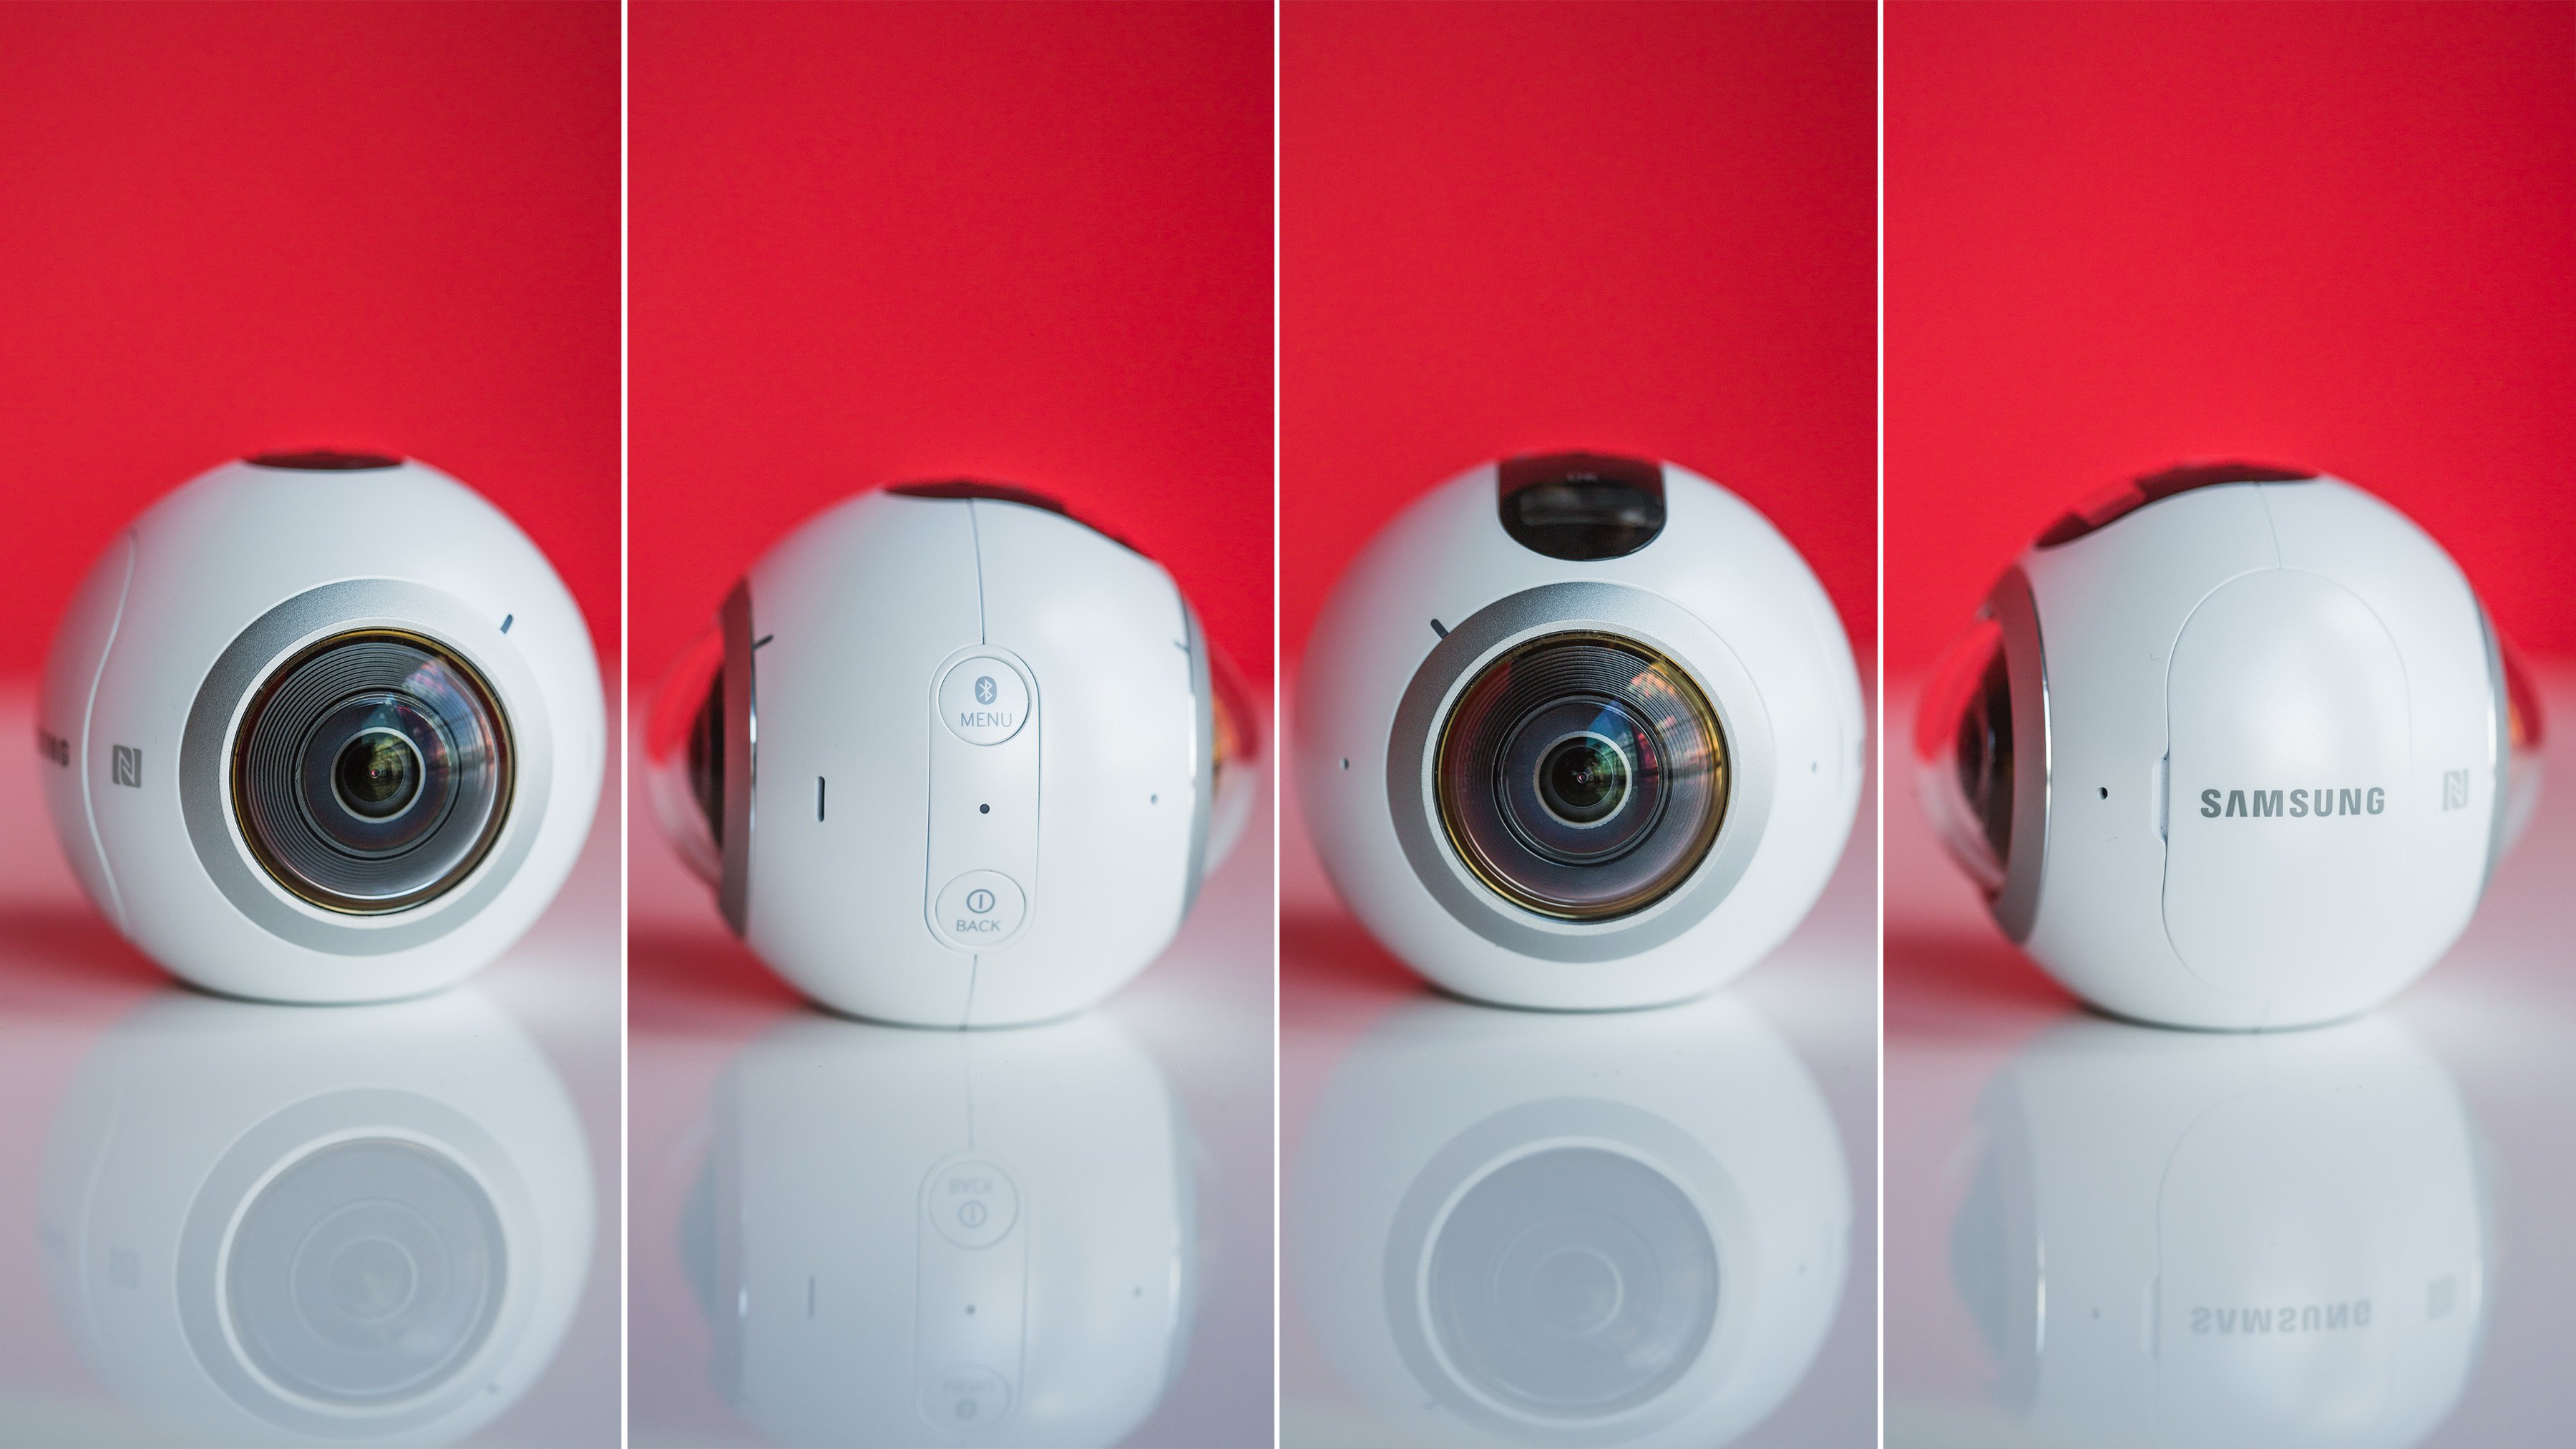 Ox zung camera footage. Камера 360 Samsung 2016. Панорамная камера lg360. Камера 360 Gear gen2. Samsung 360 Camera IRDA.